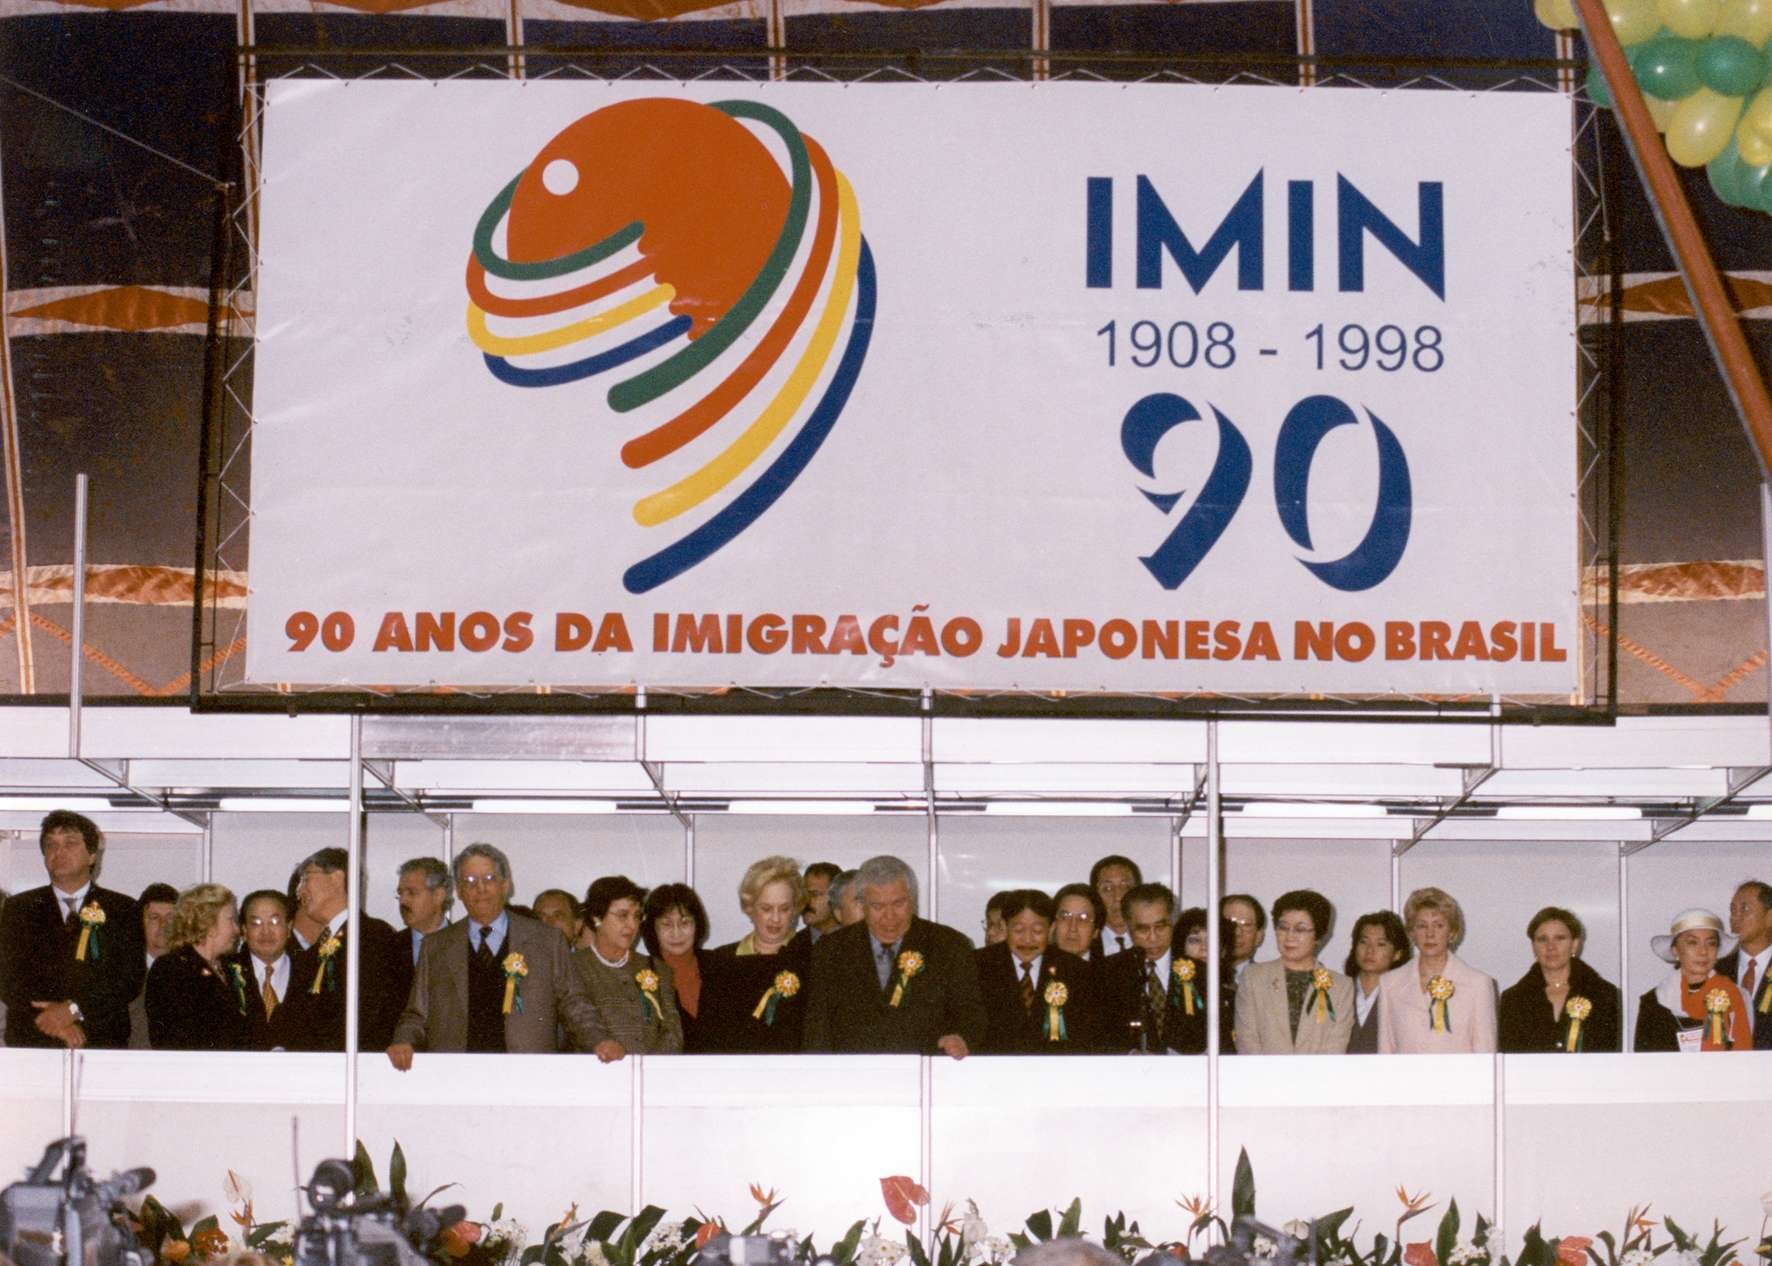 Festividades do Imin 90 - 1998